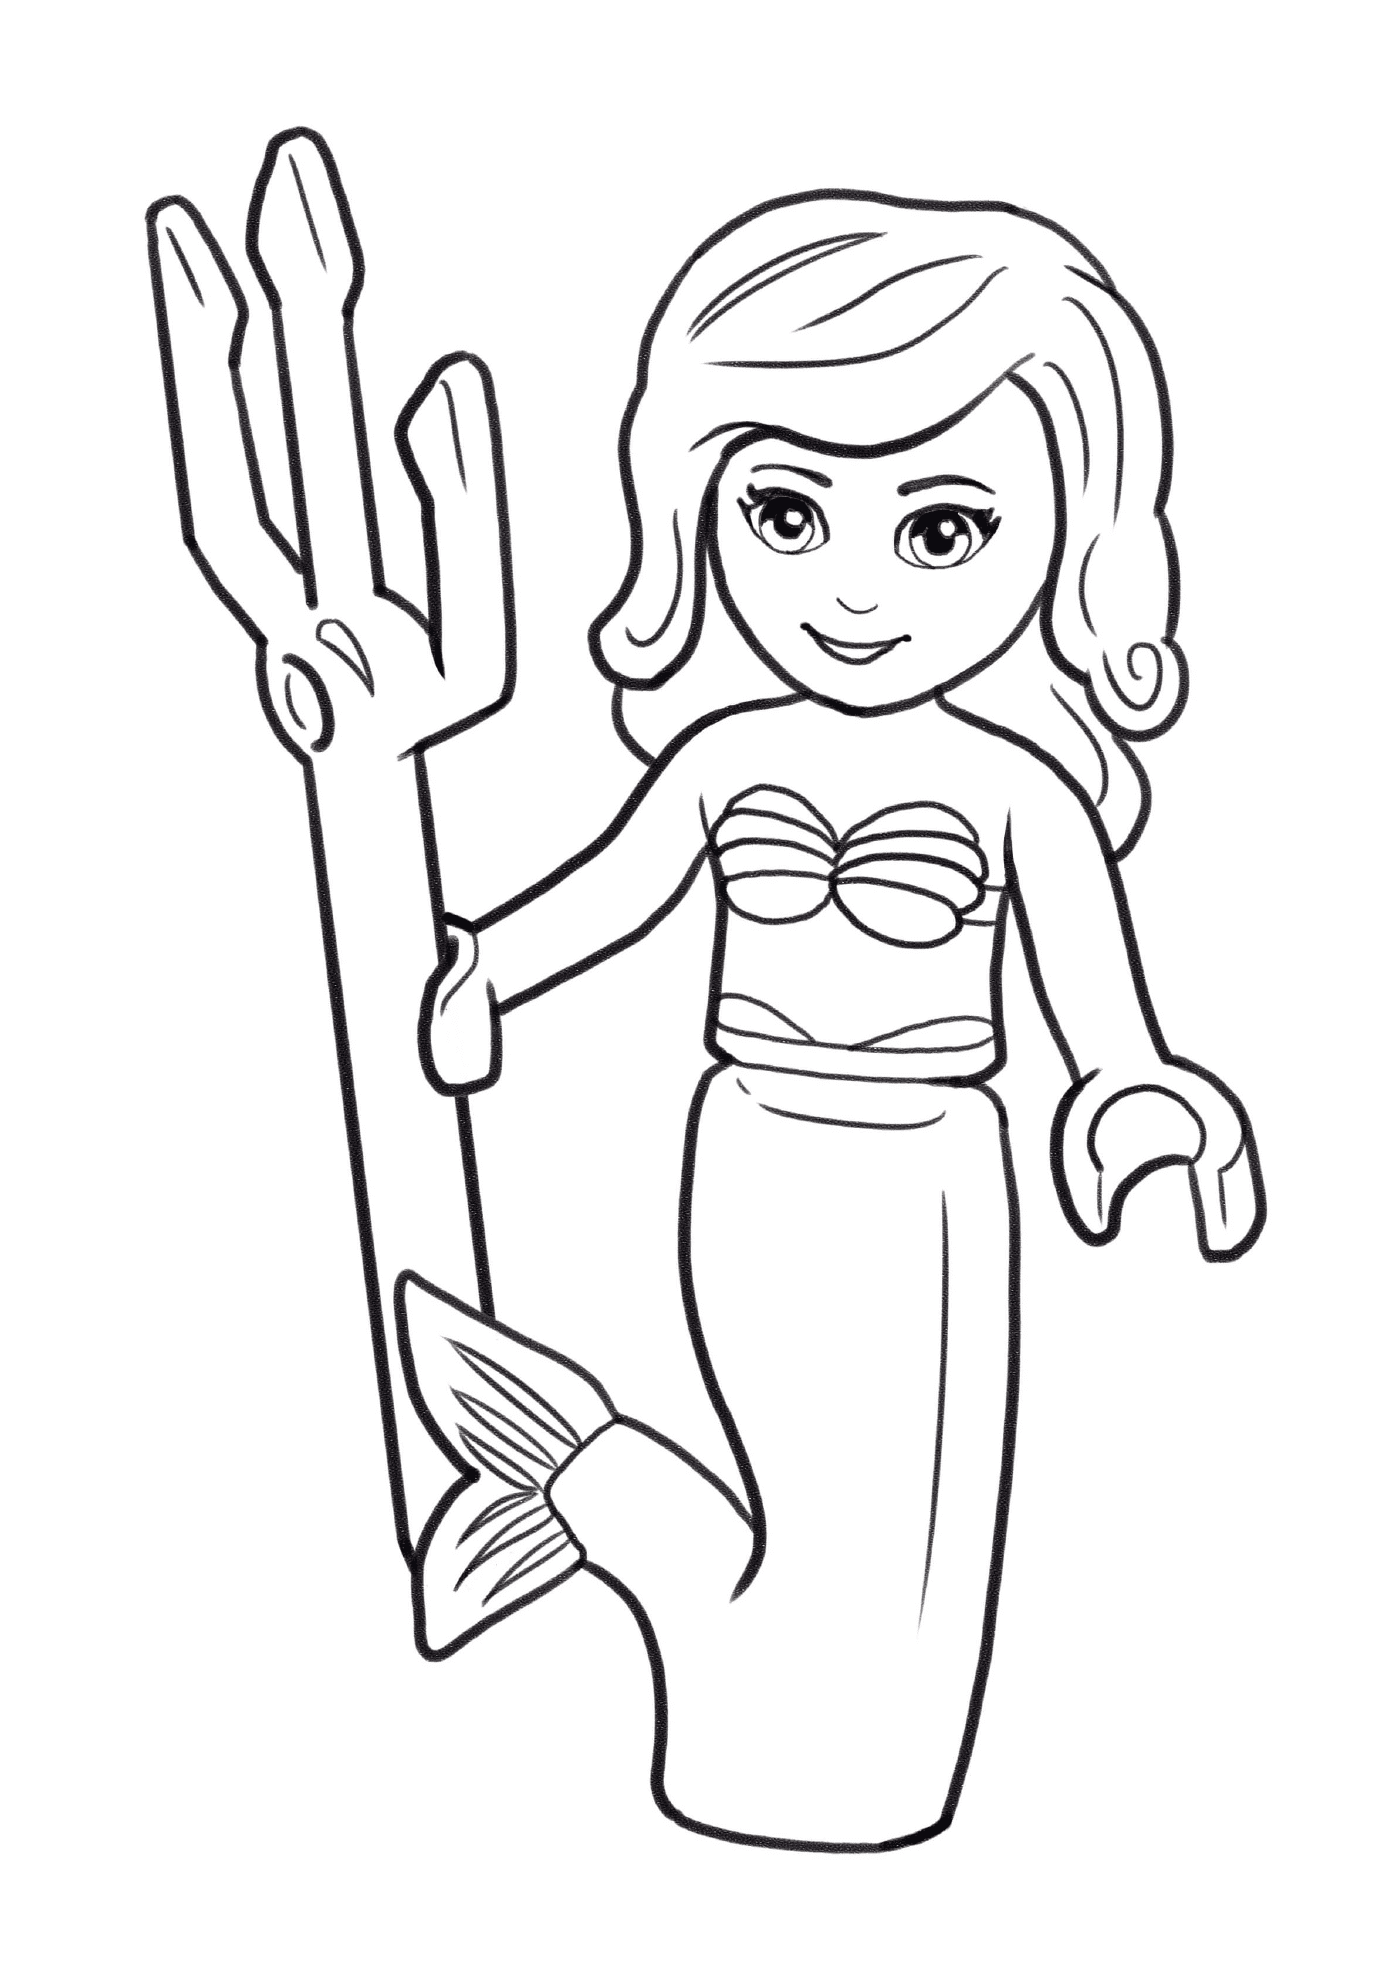  A Lego mermaid holding a trident 